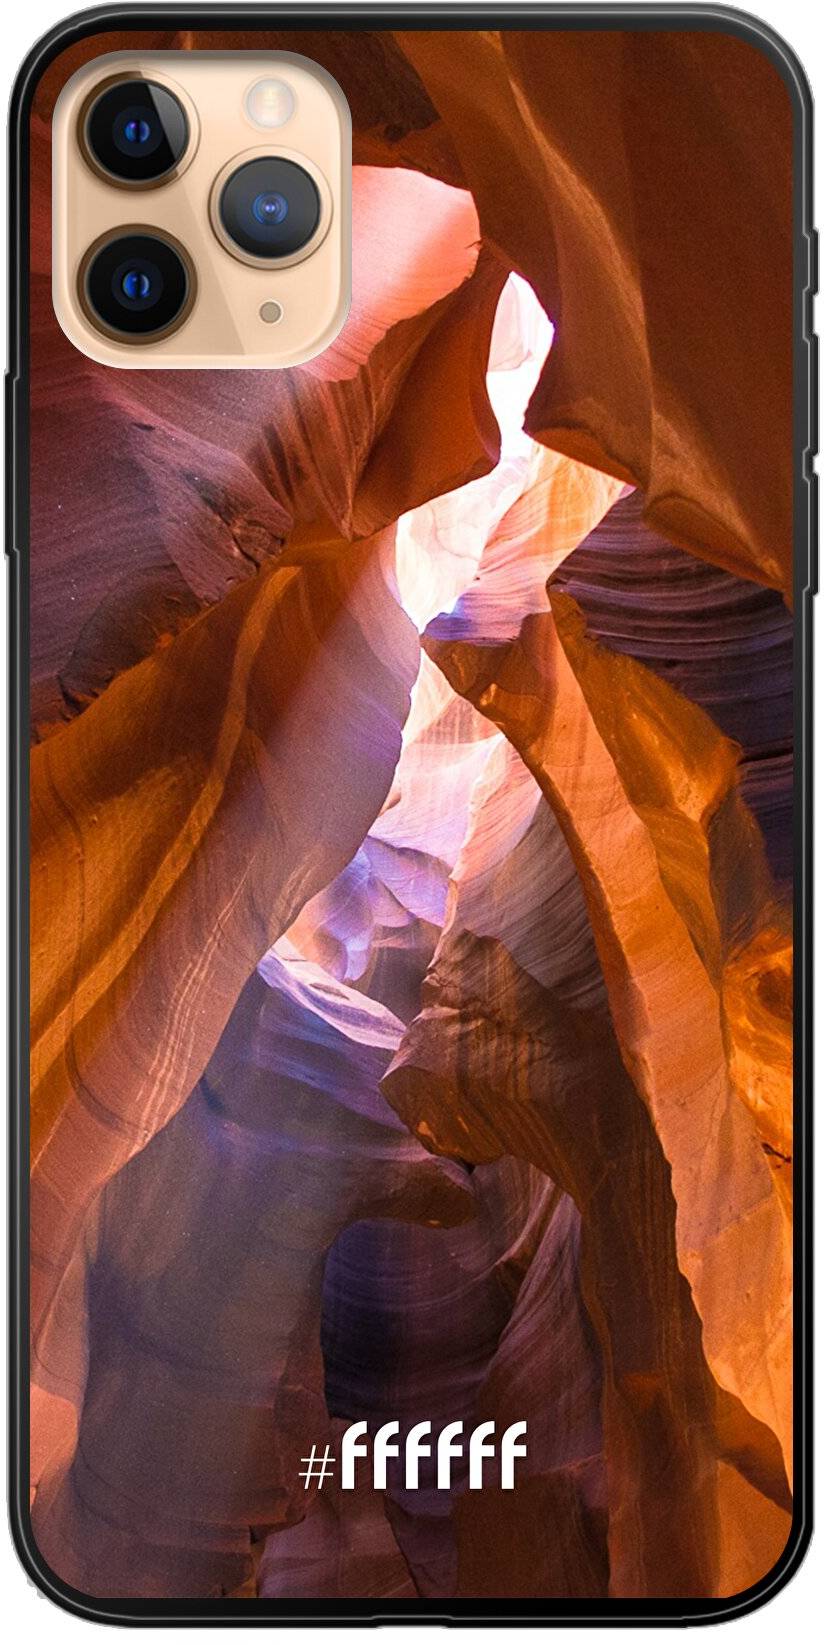 Sunray Canyon iPhone 11 Pro Max